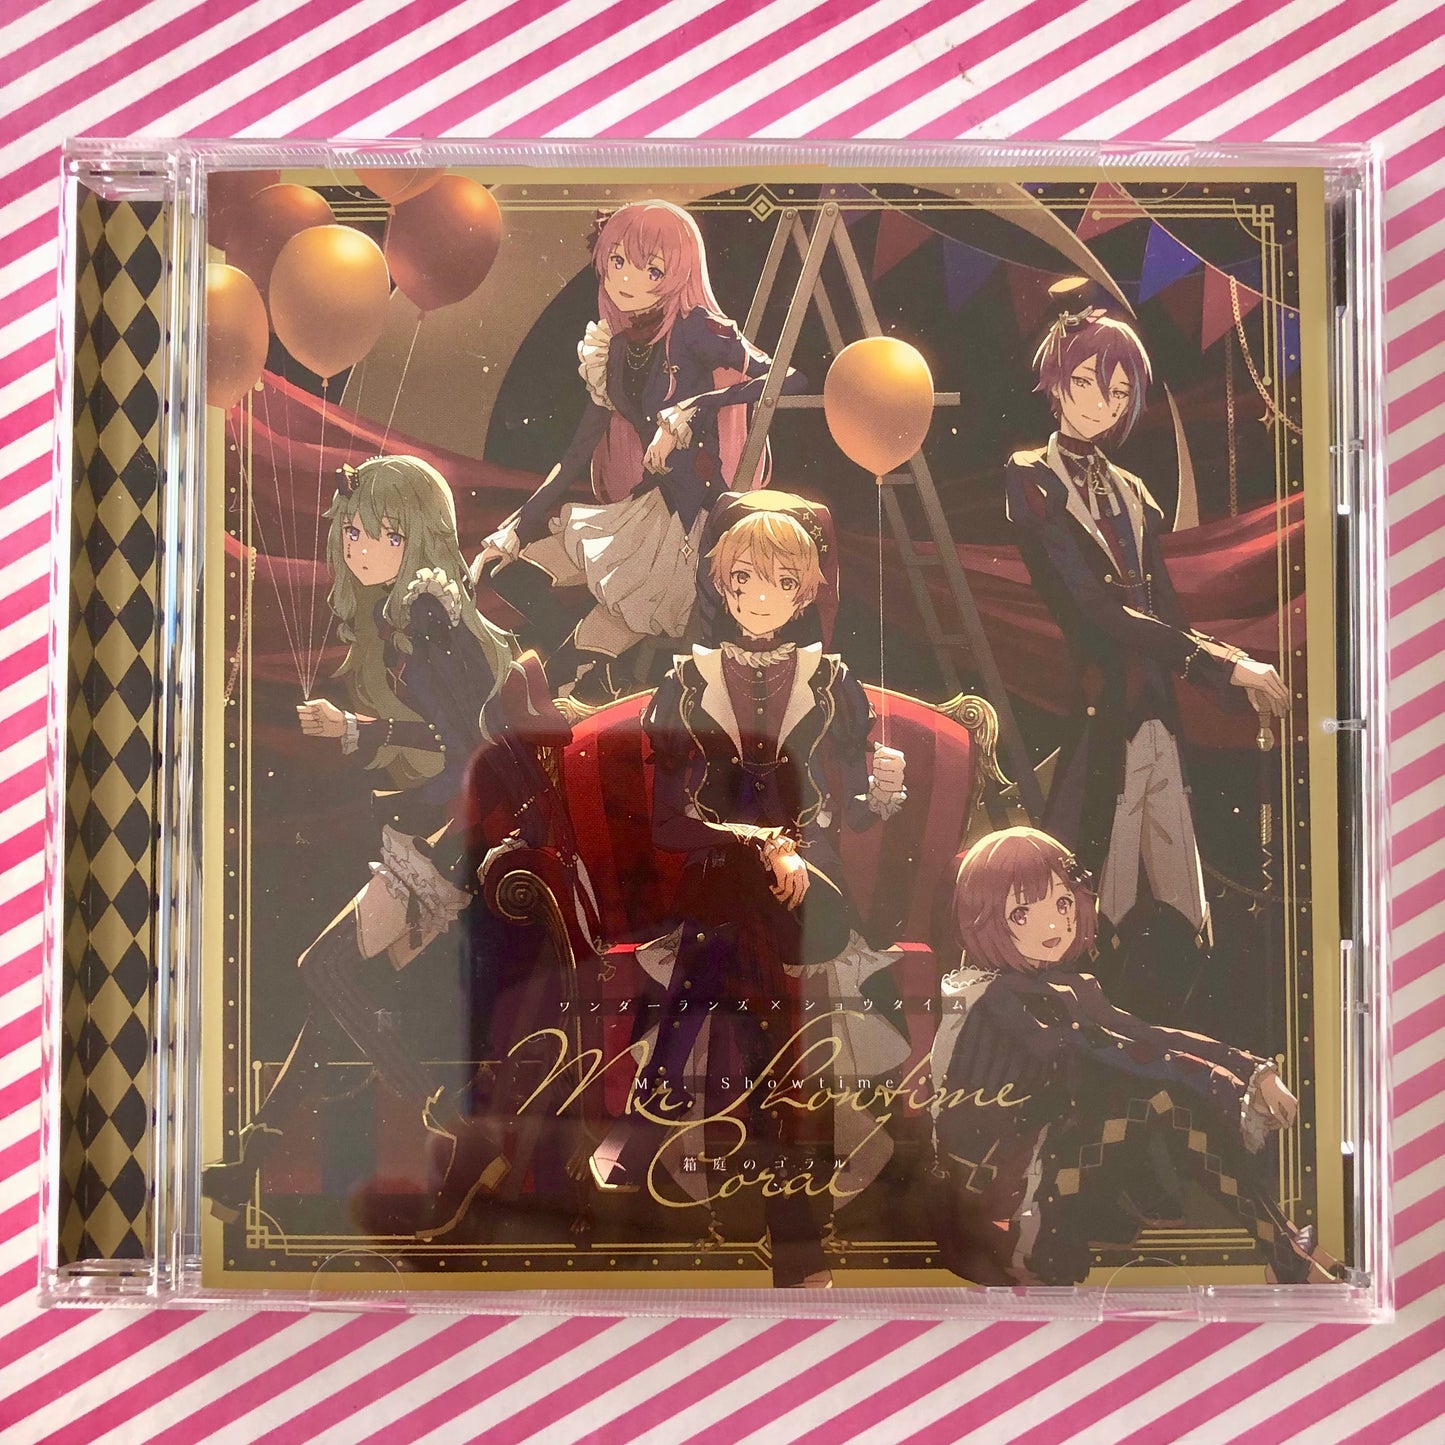 Wonderlands x Showtime - Mr. Showtime / Hakoniwa No Coral Single CD Project Sekai Colorful Stage ! pi. Hatsune Miku